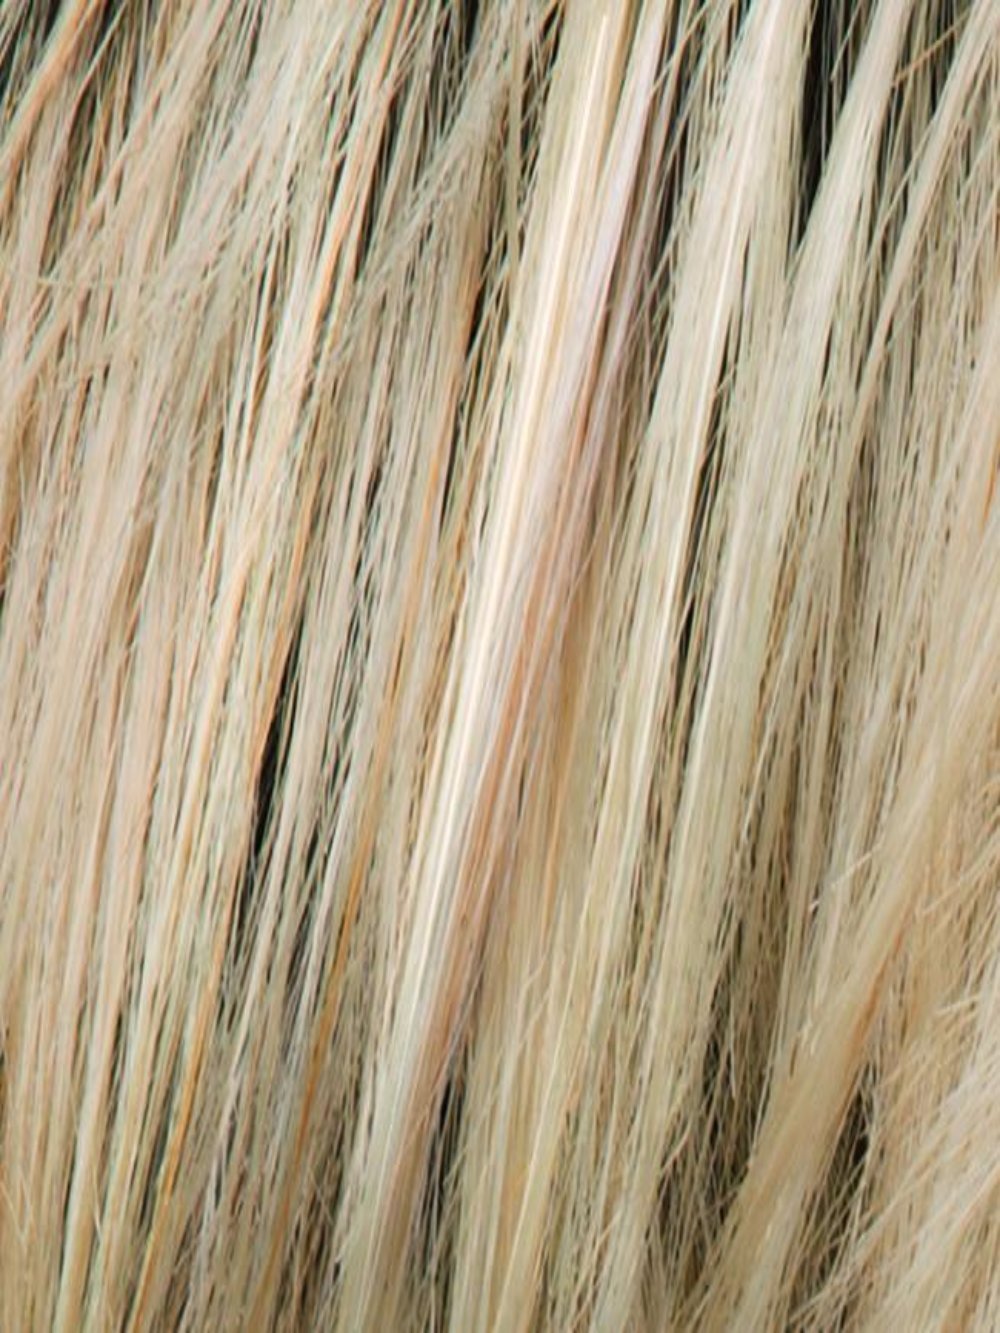 CHAMPAGNE ROOTED | Light Beige Blonde,  Medium Honey Blonde, and Platinum Blonde Blend with Dark Roots